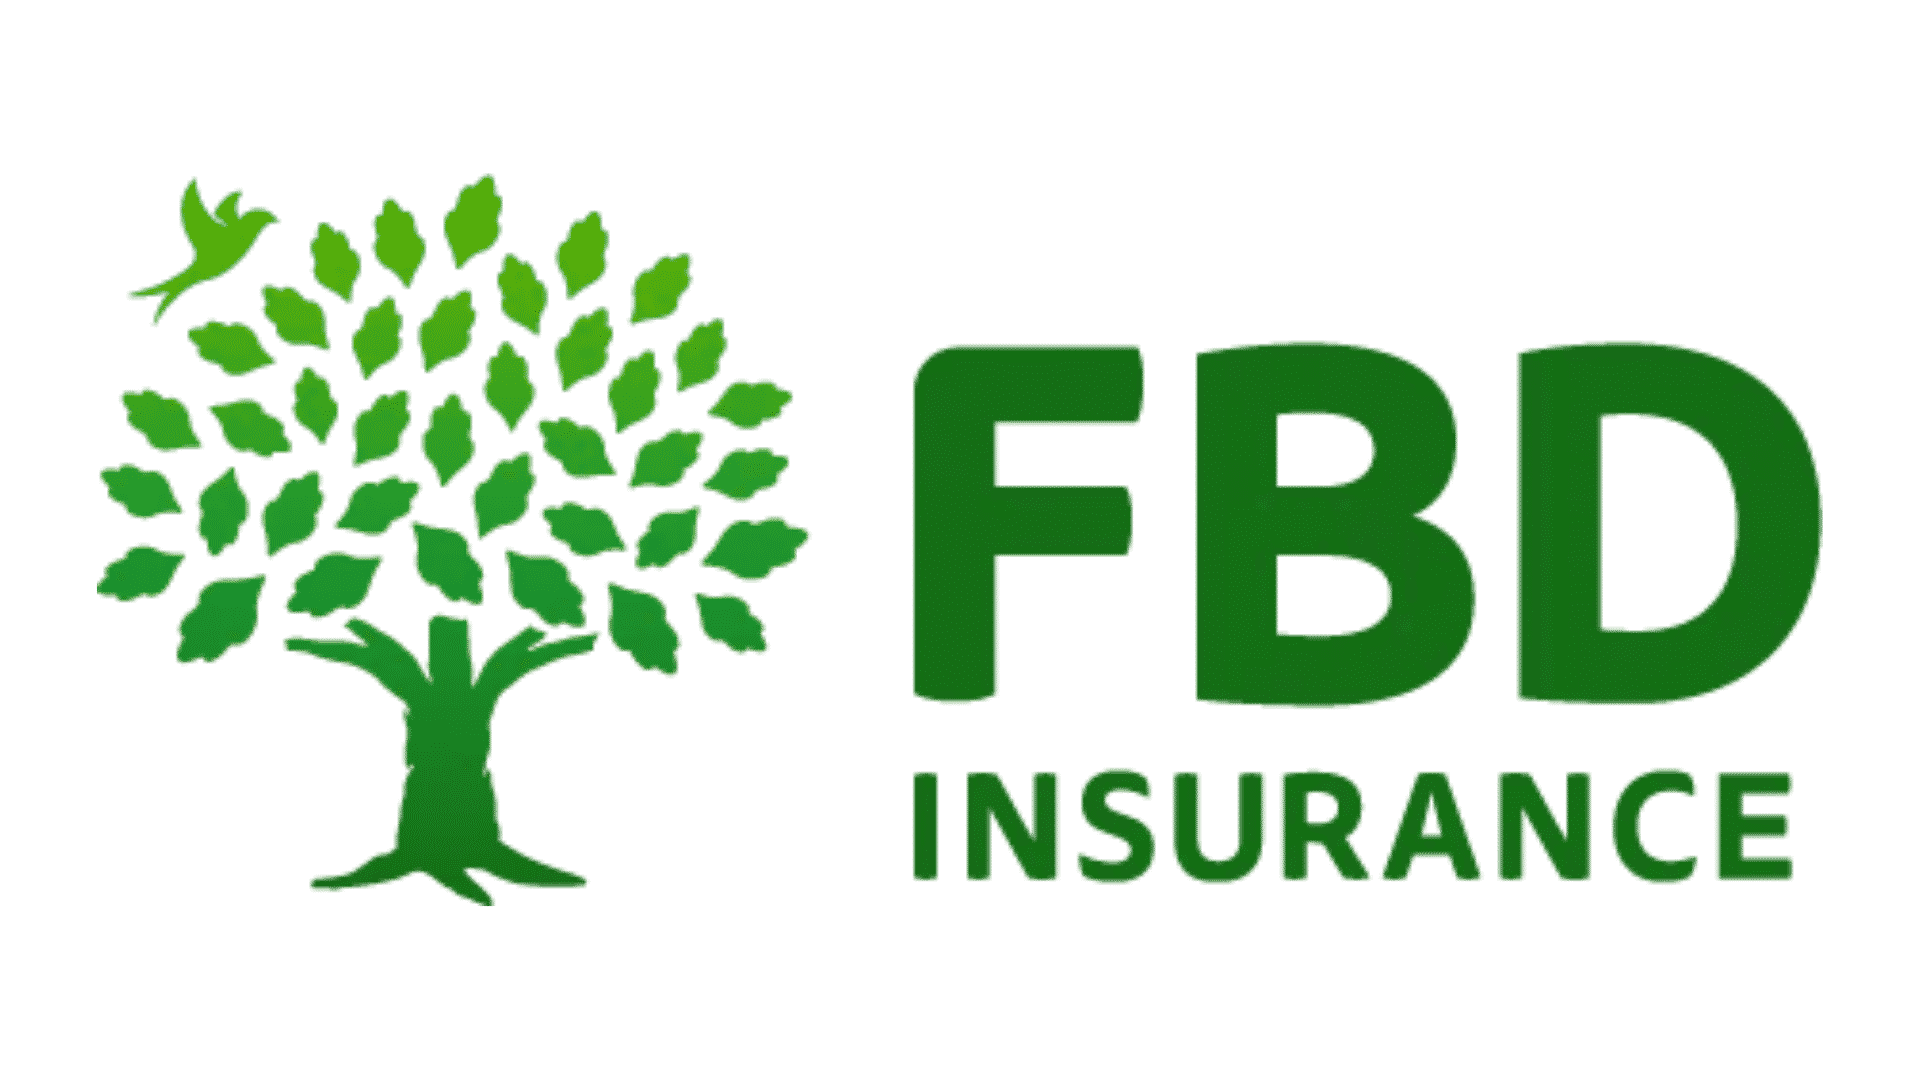 Head of eCommerce at FBD Insurance